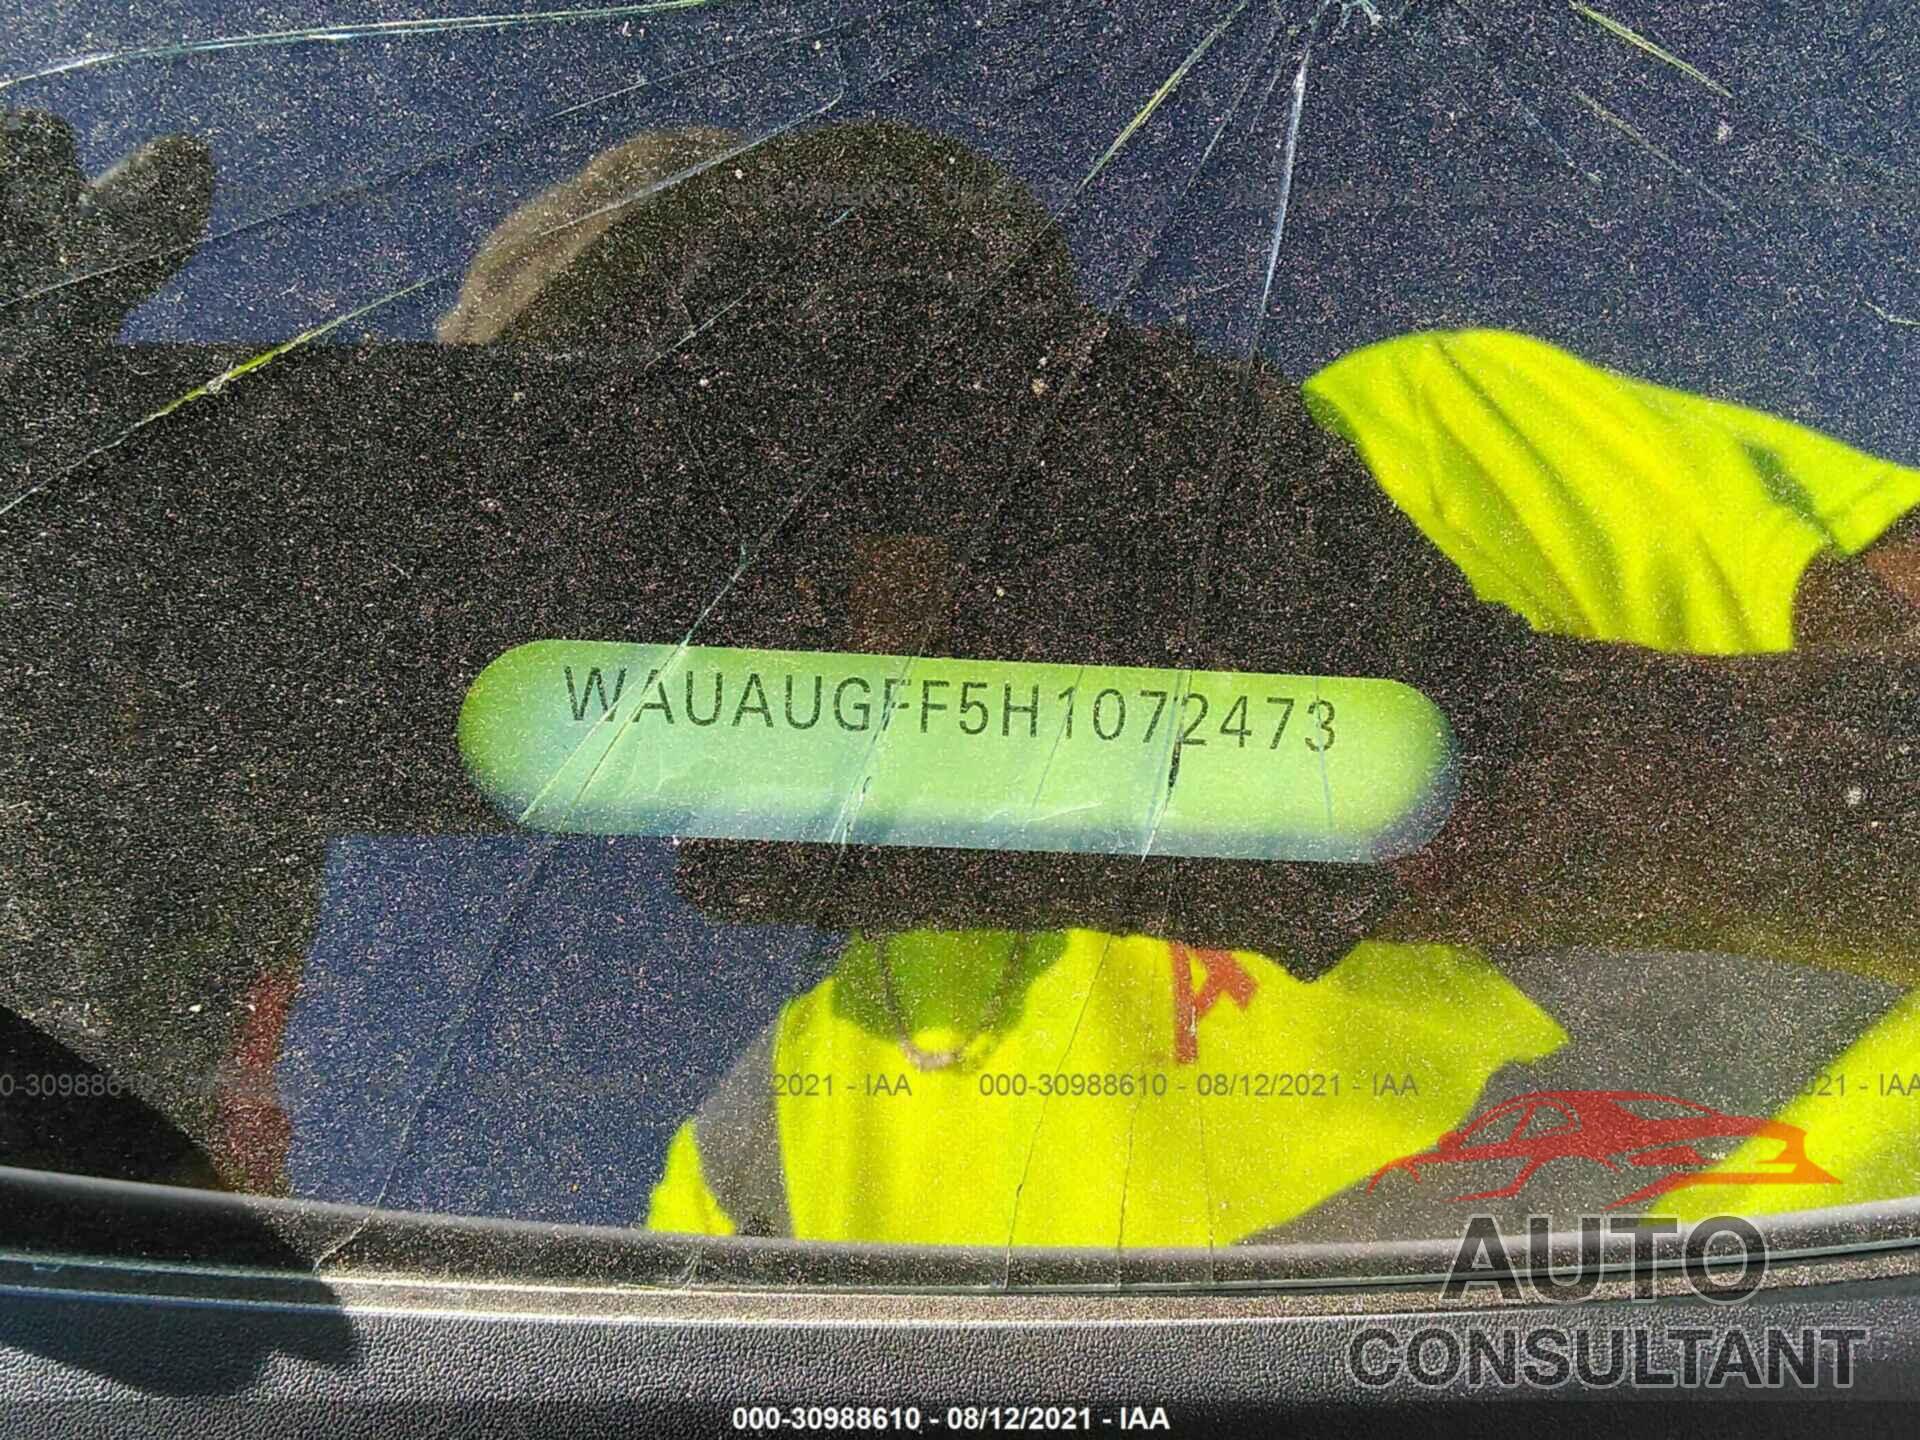 AUDI A3 SEDAN 2017 - WAUAUGFF5H1072473